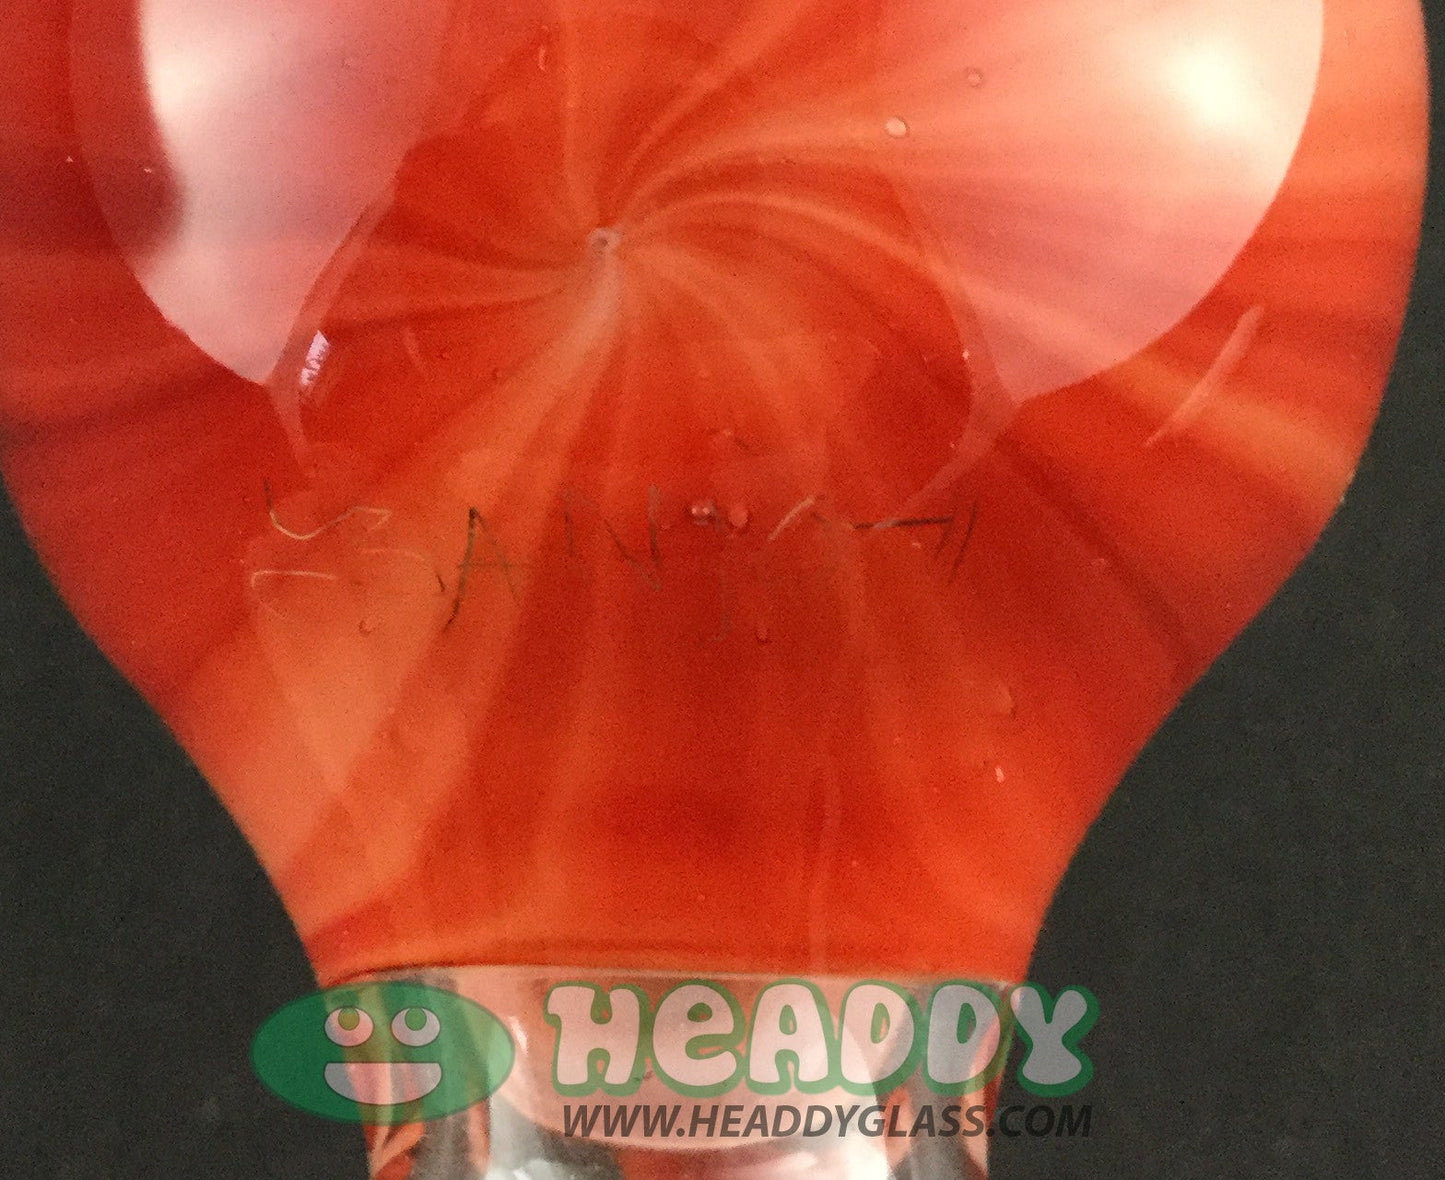 Banjo 14mm dome - Headdy Glass - HG